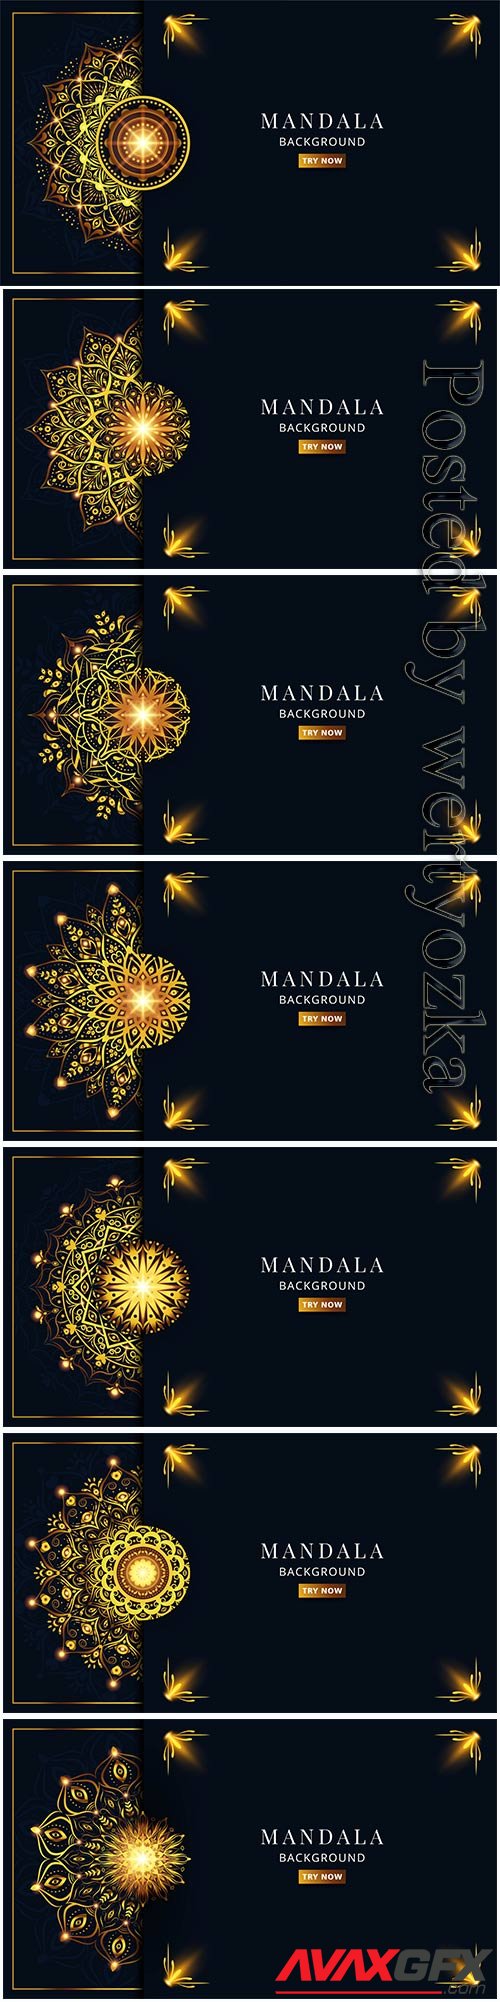 Luxury golden mandala vector banner